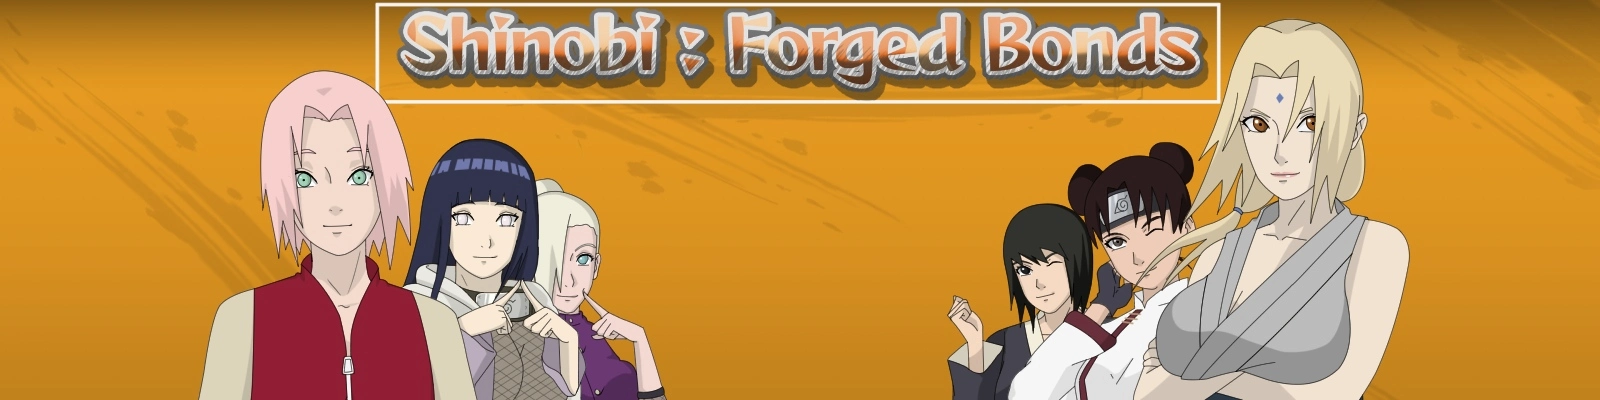 Shinobi : Forged Bonds [v0.1 DEMO] main image